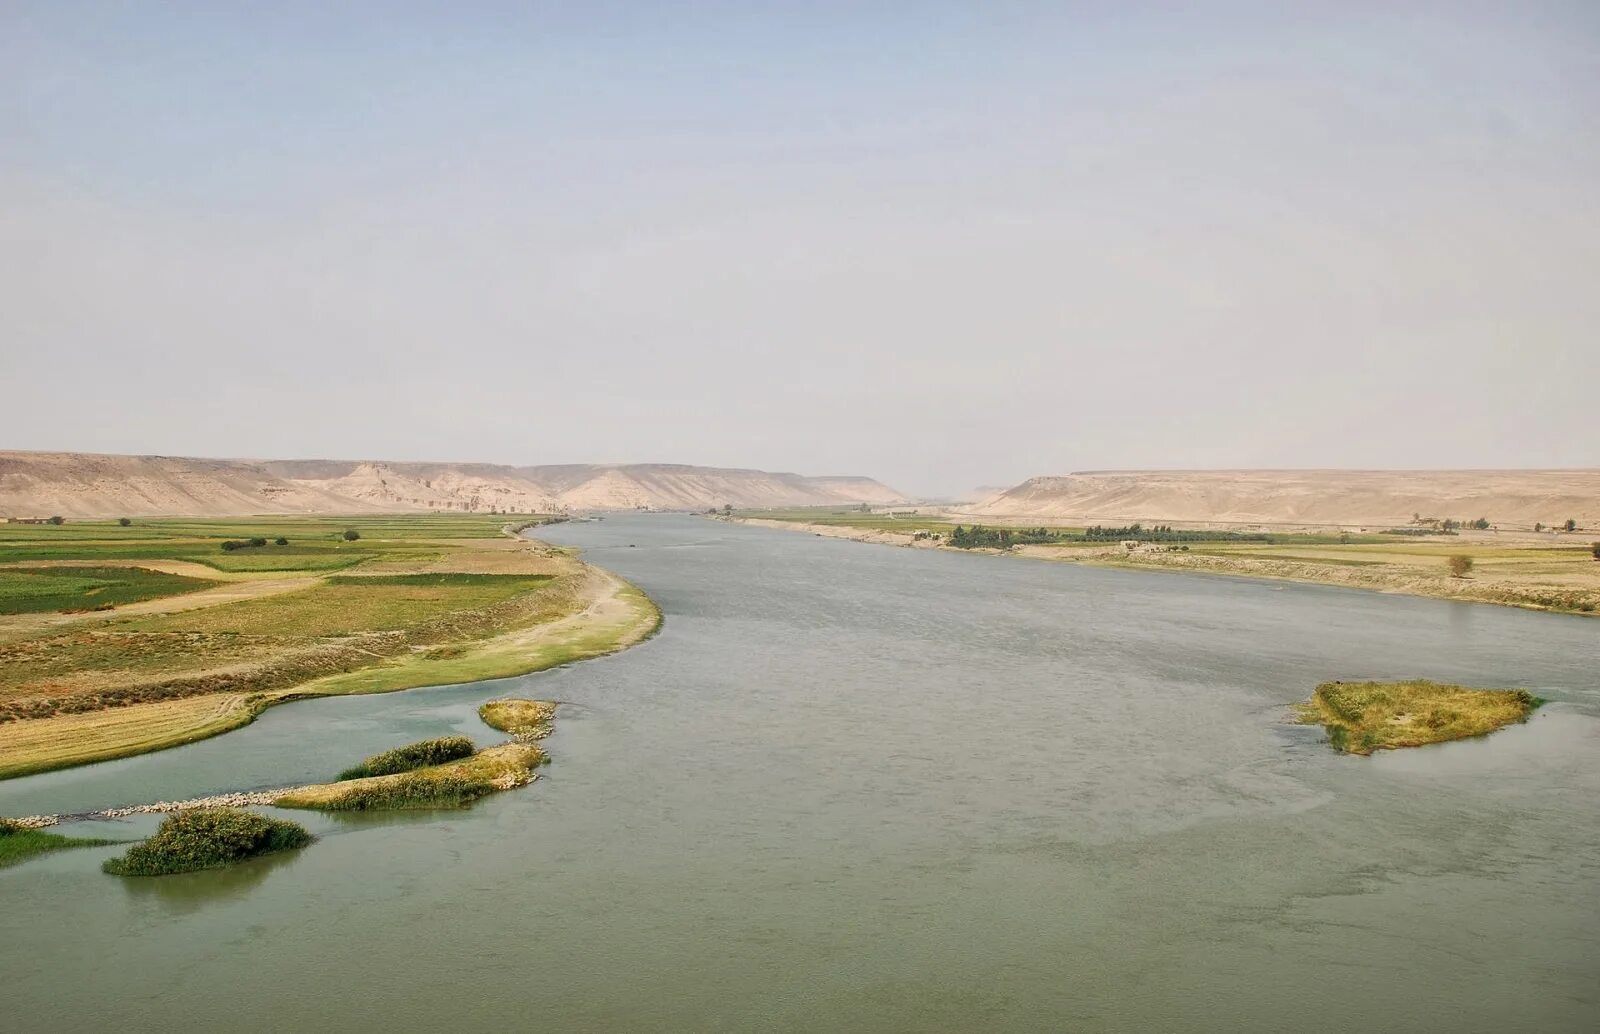 Реки тигр и евфрат в какой. Долина реки Евфрат. Река Евфрат в Сирии. Долина рек тигр и Евфрат. Река Евфрат Вавилон.